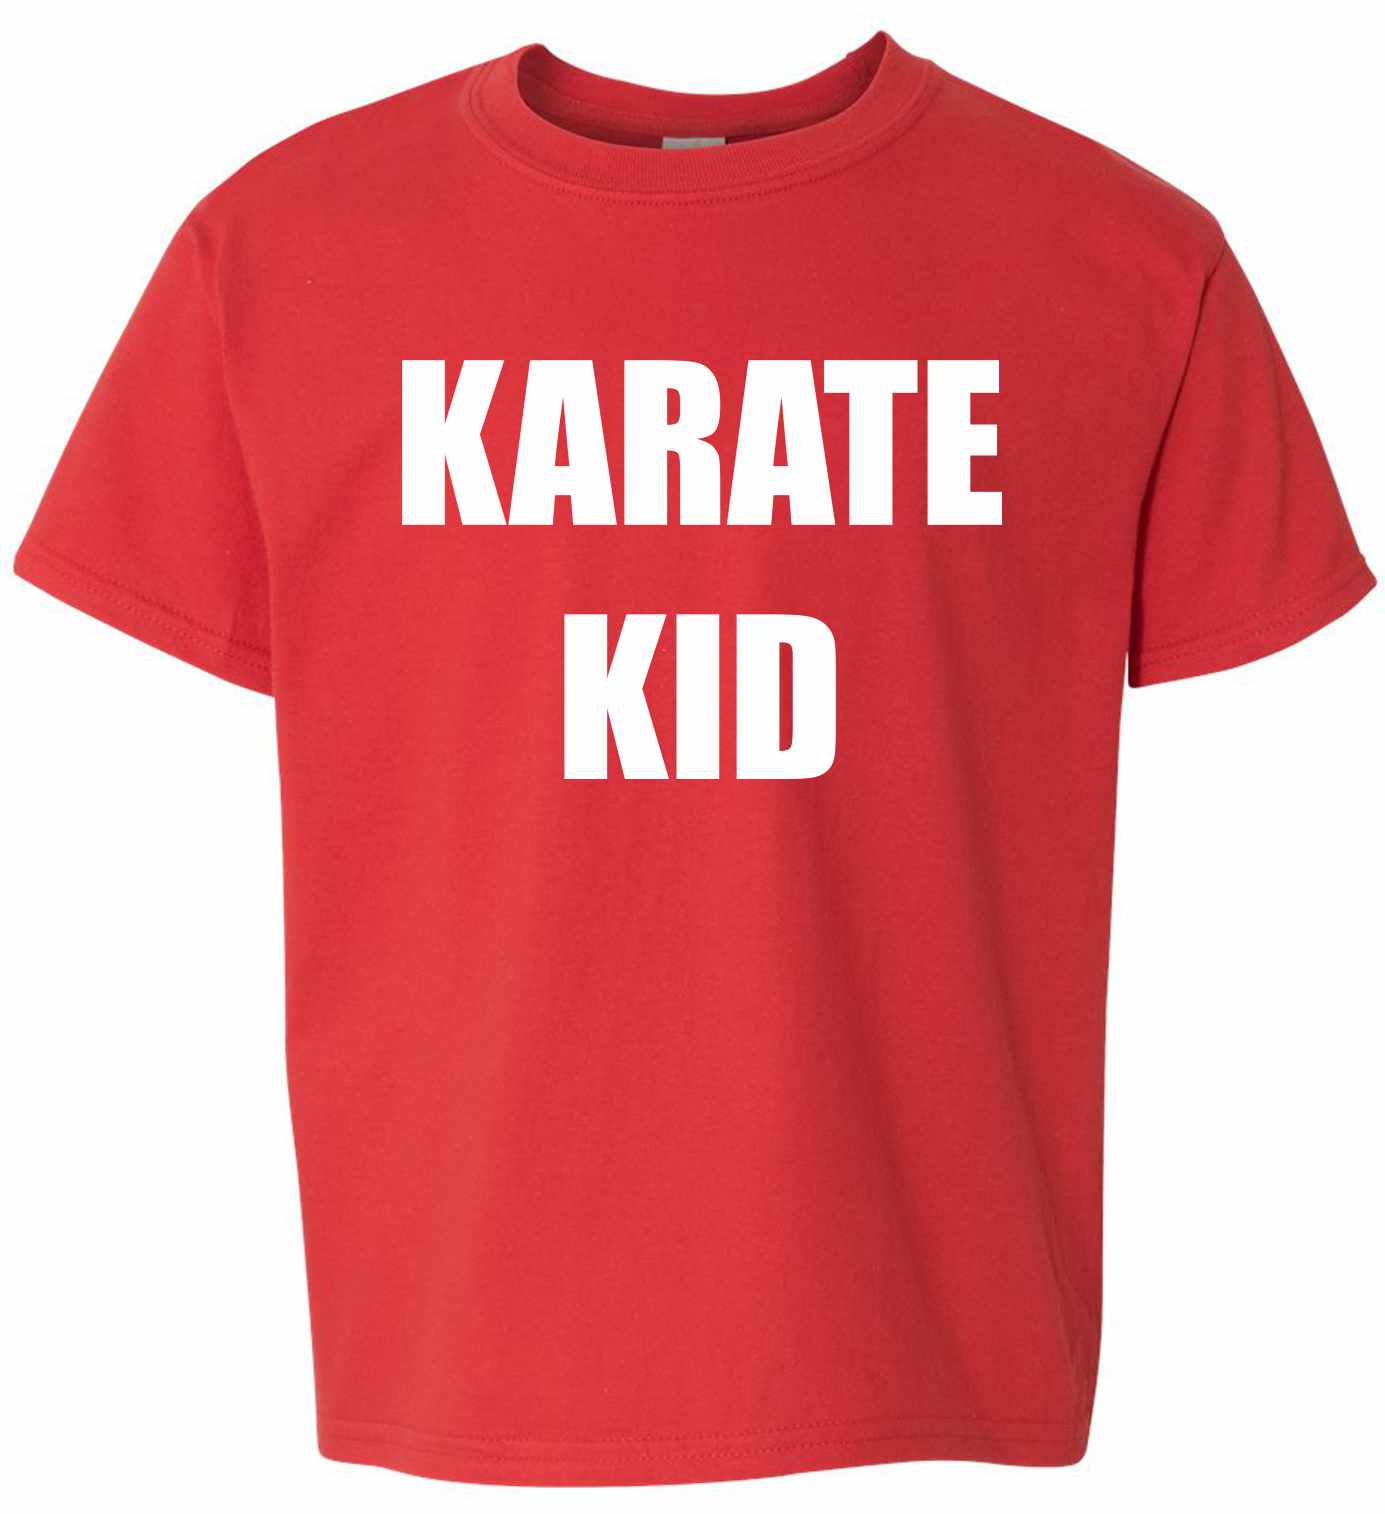 KARATE KID on Kids T-Shirt